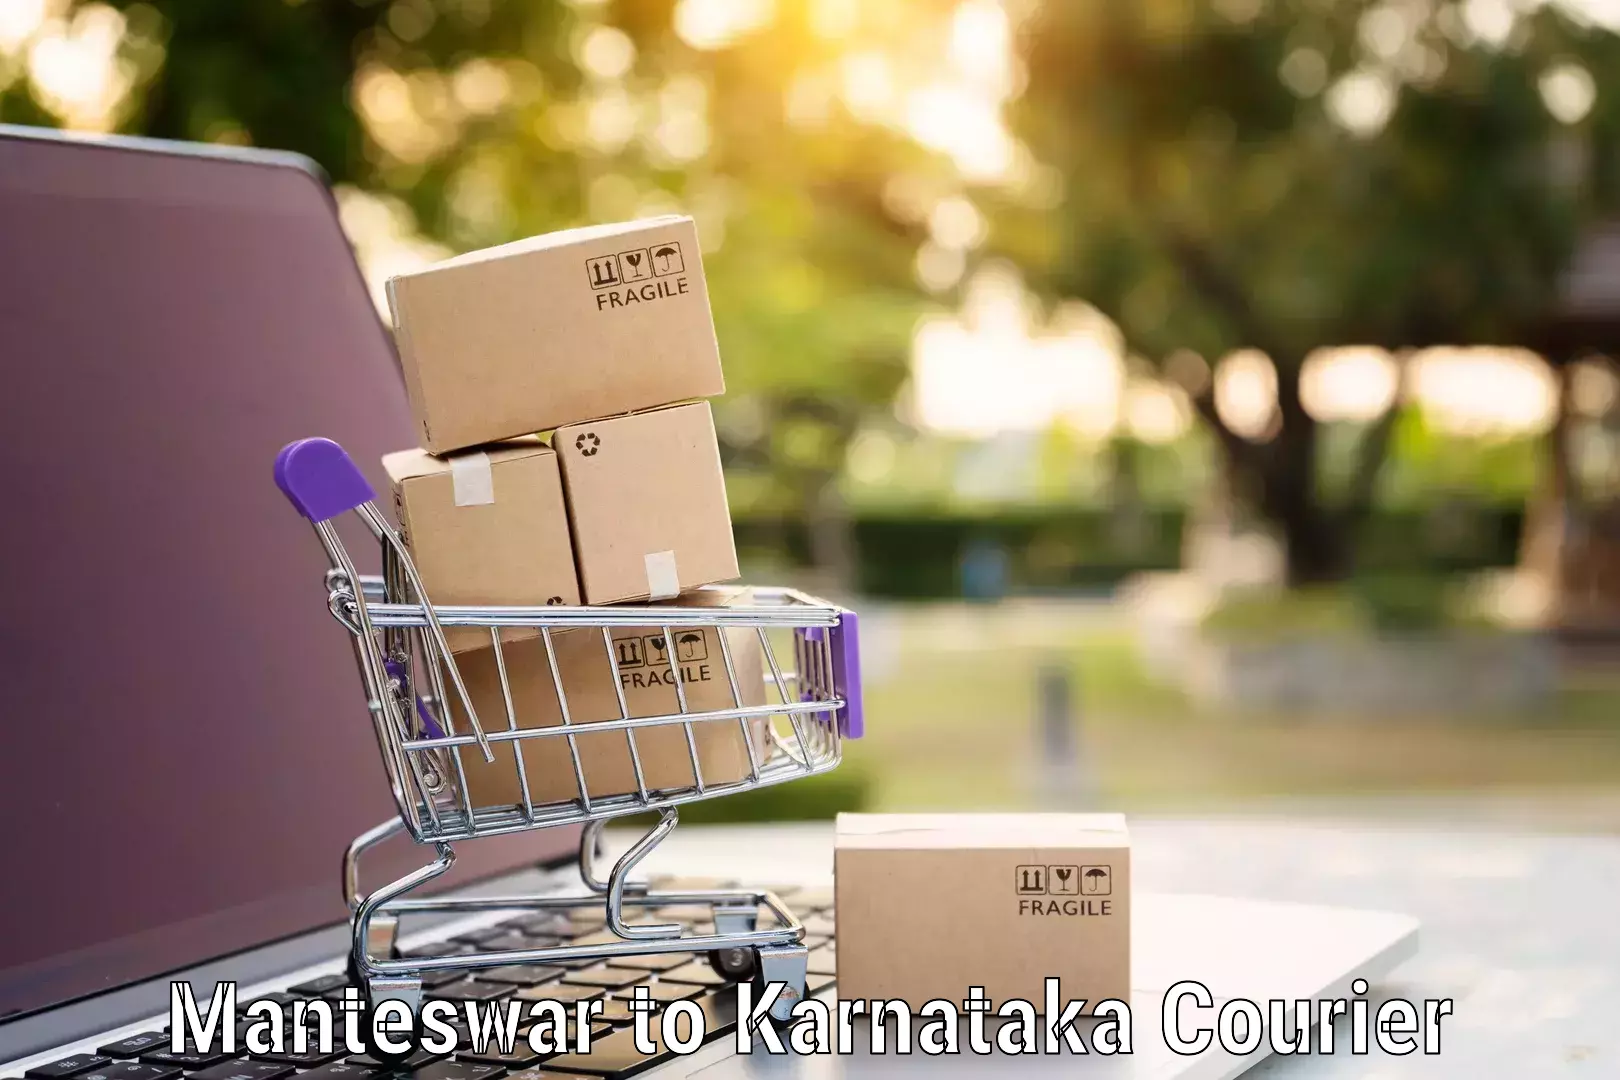 Trusted relocation experts Manteswar to Karnataka